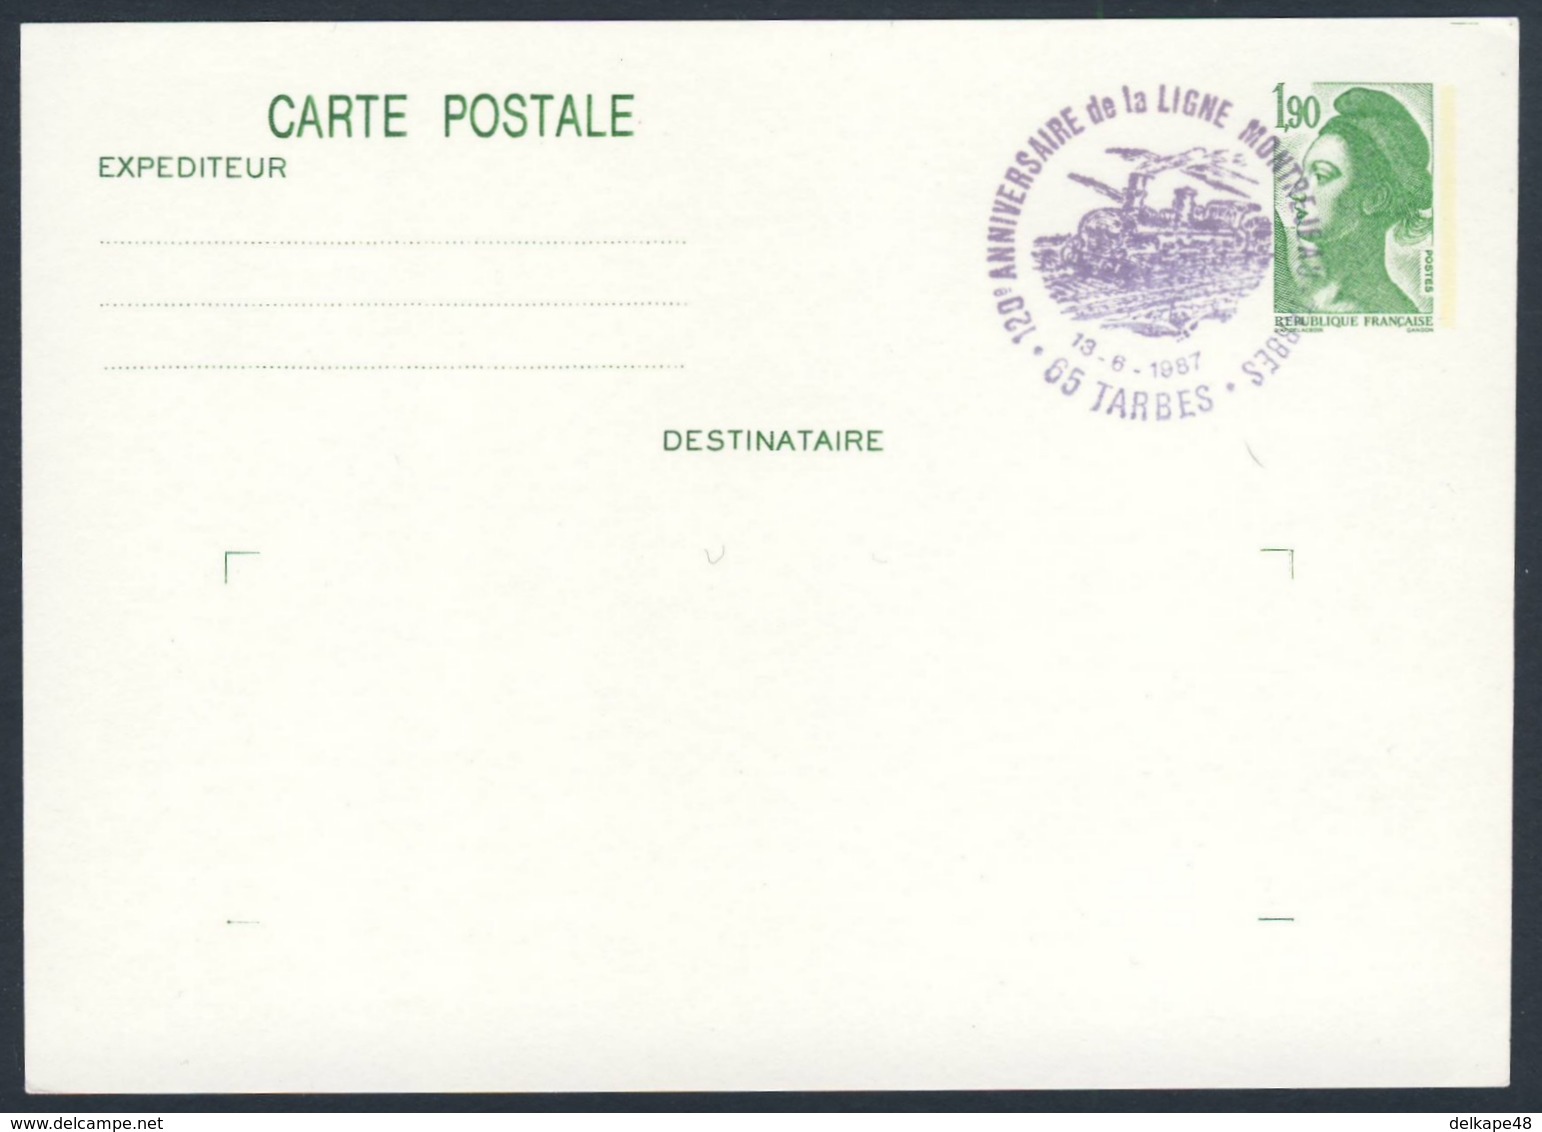 France Rep. Française 1987 Card / Karte / Carte - 120e Ann. Ligne Montrejeau - Tarbes / Railway / Eisenbahn - Treinen